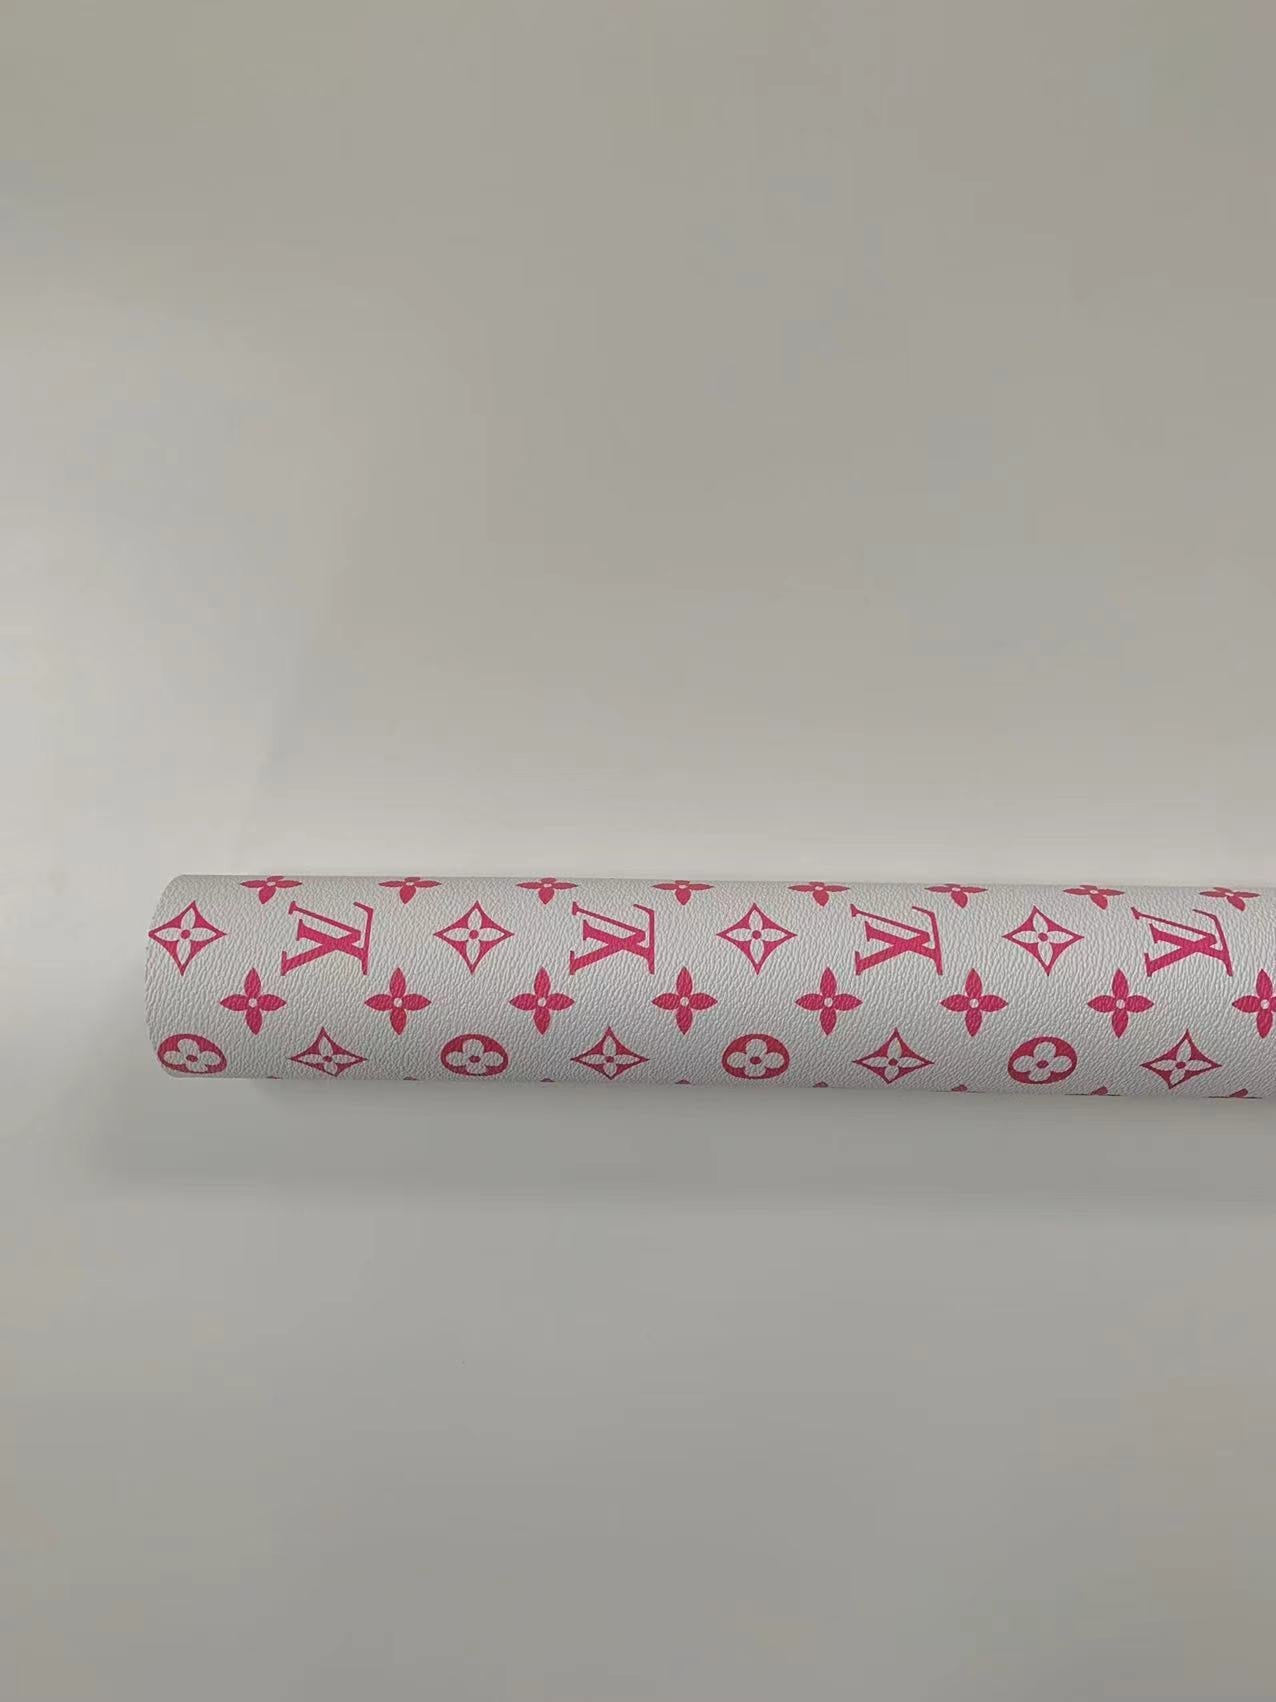 LV Fabric Pink Louis Vuitton Fabric – FabricViva